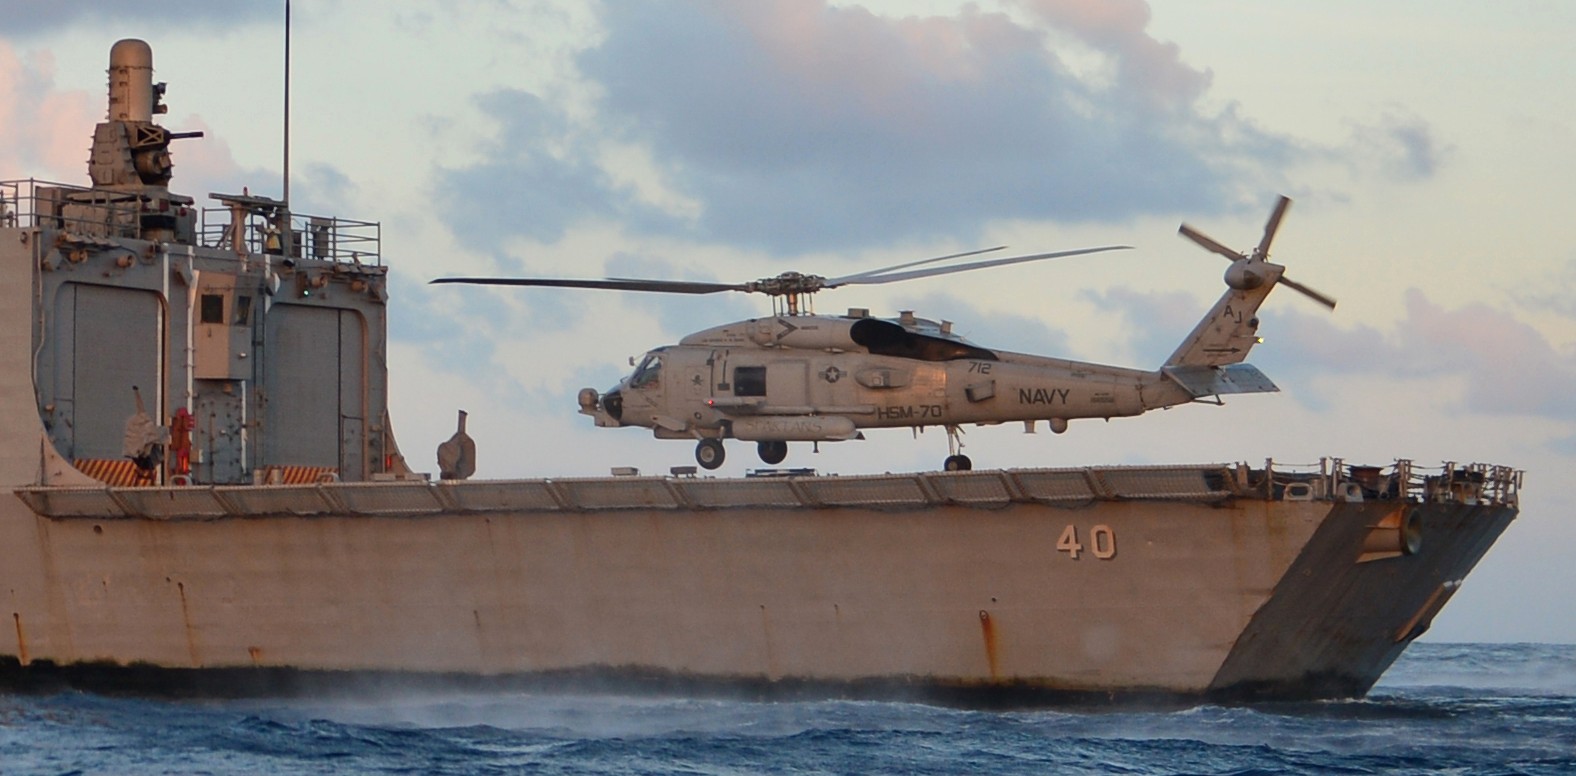 hsm-70 spartans helicopter maritime strike squadron mh-60r seahawk 2012 108 uss halyburton ffg-40